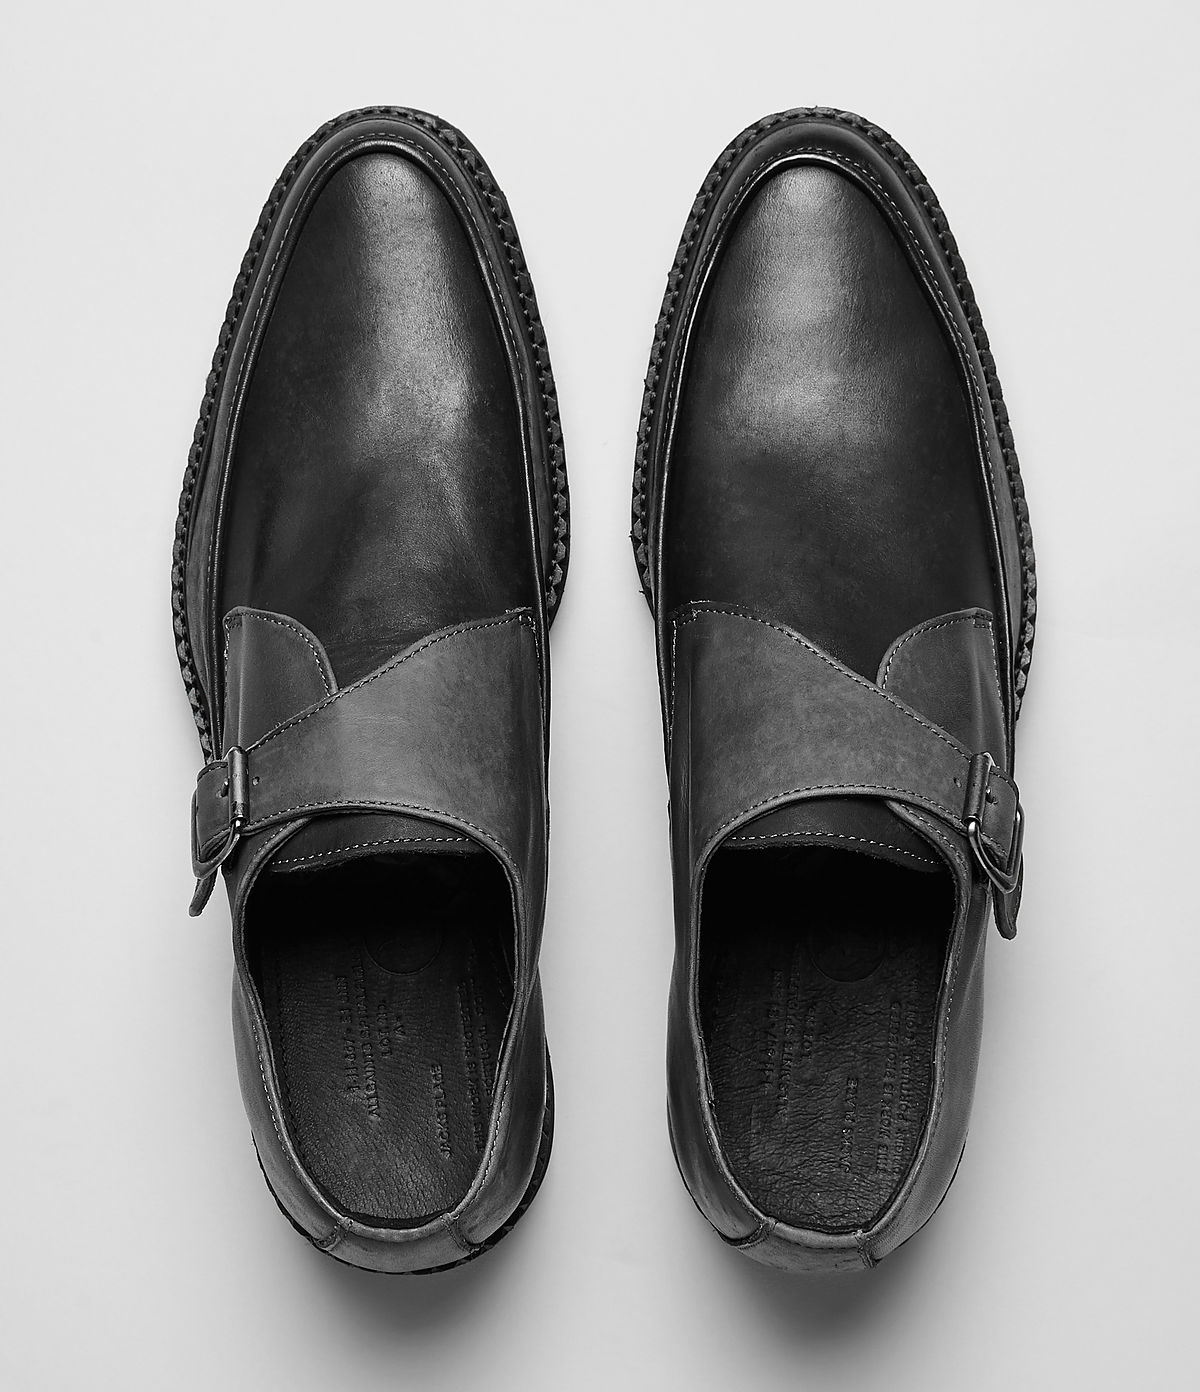 Lyst - AllSaints Edgehill Shoe in Black for Men